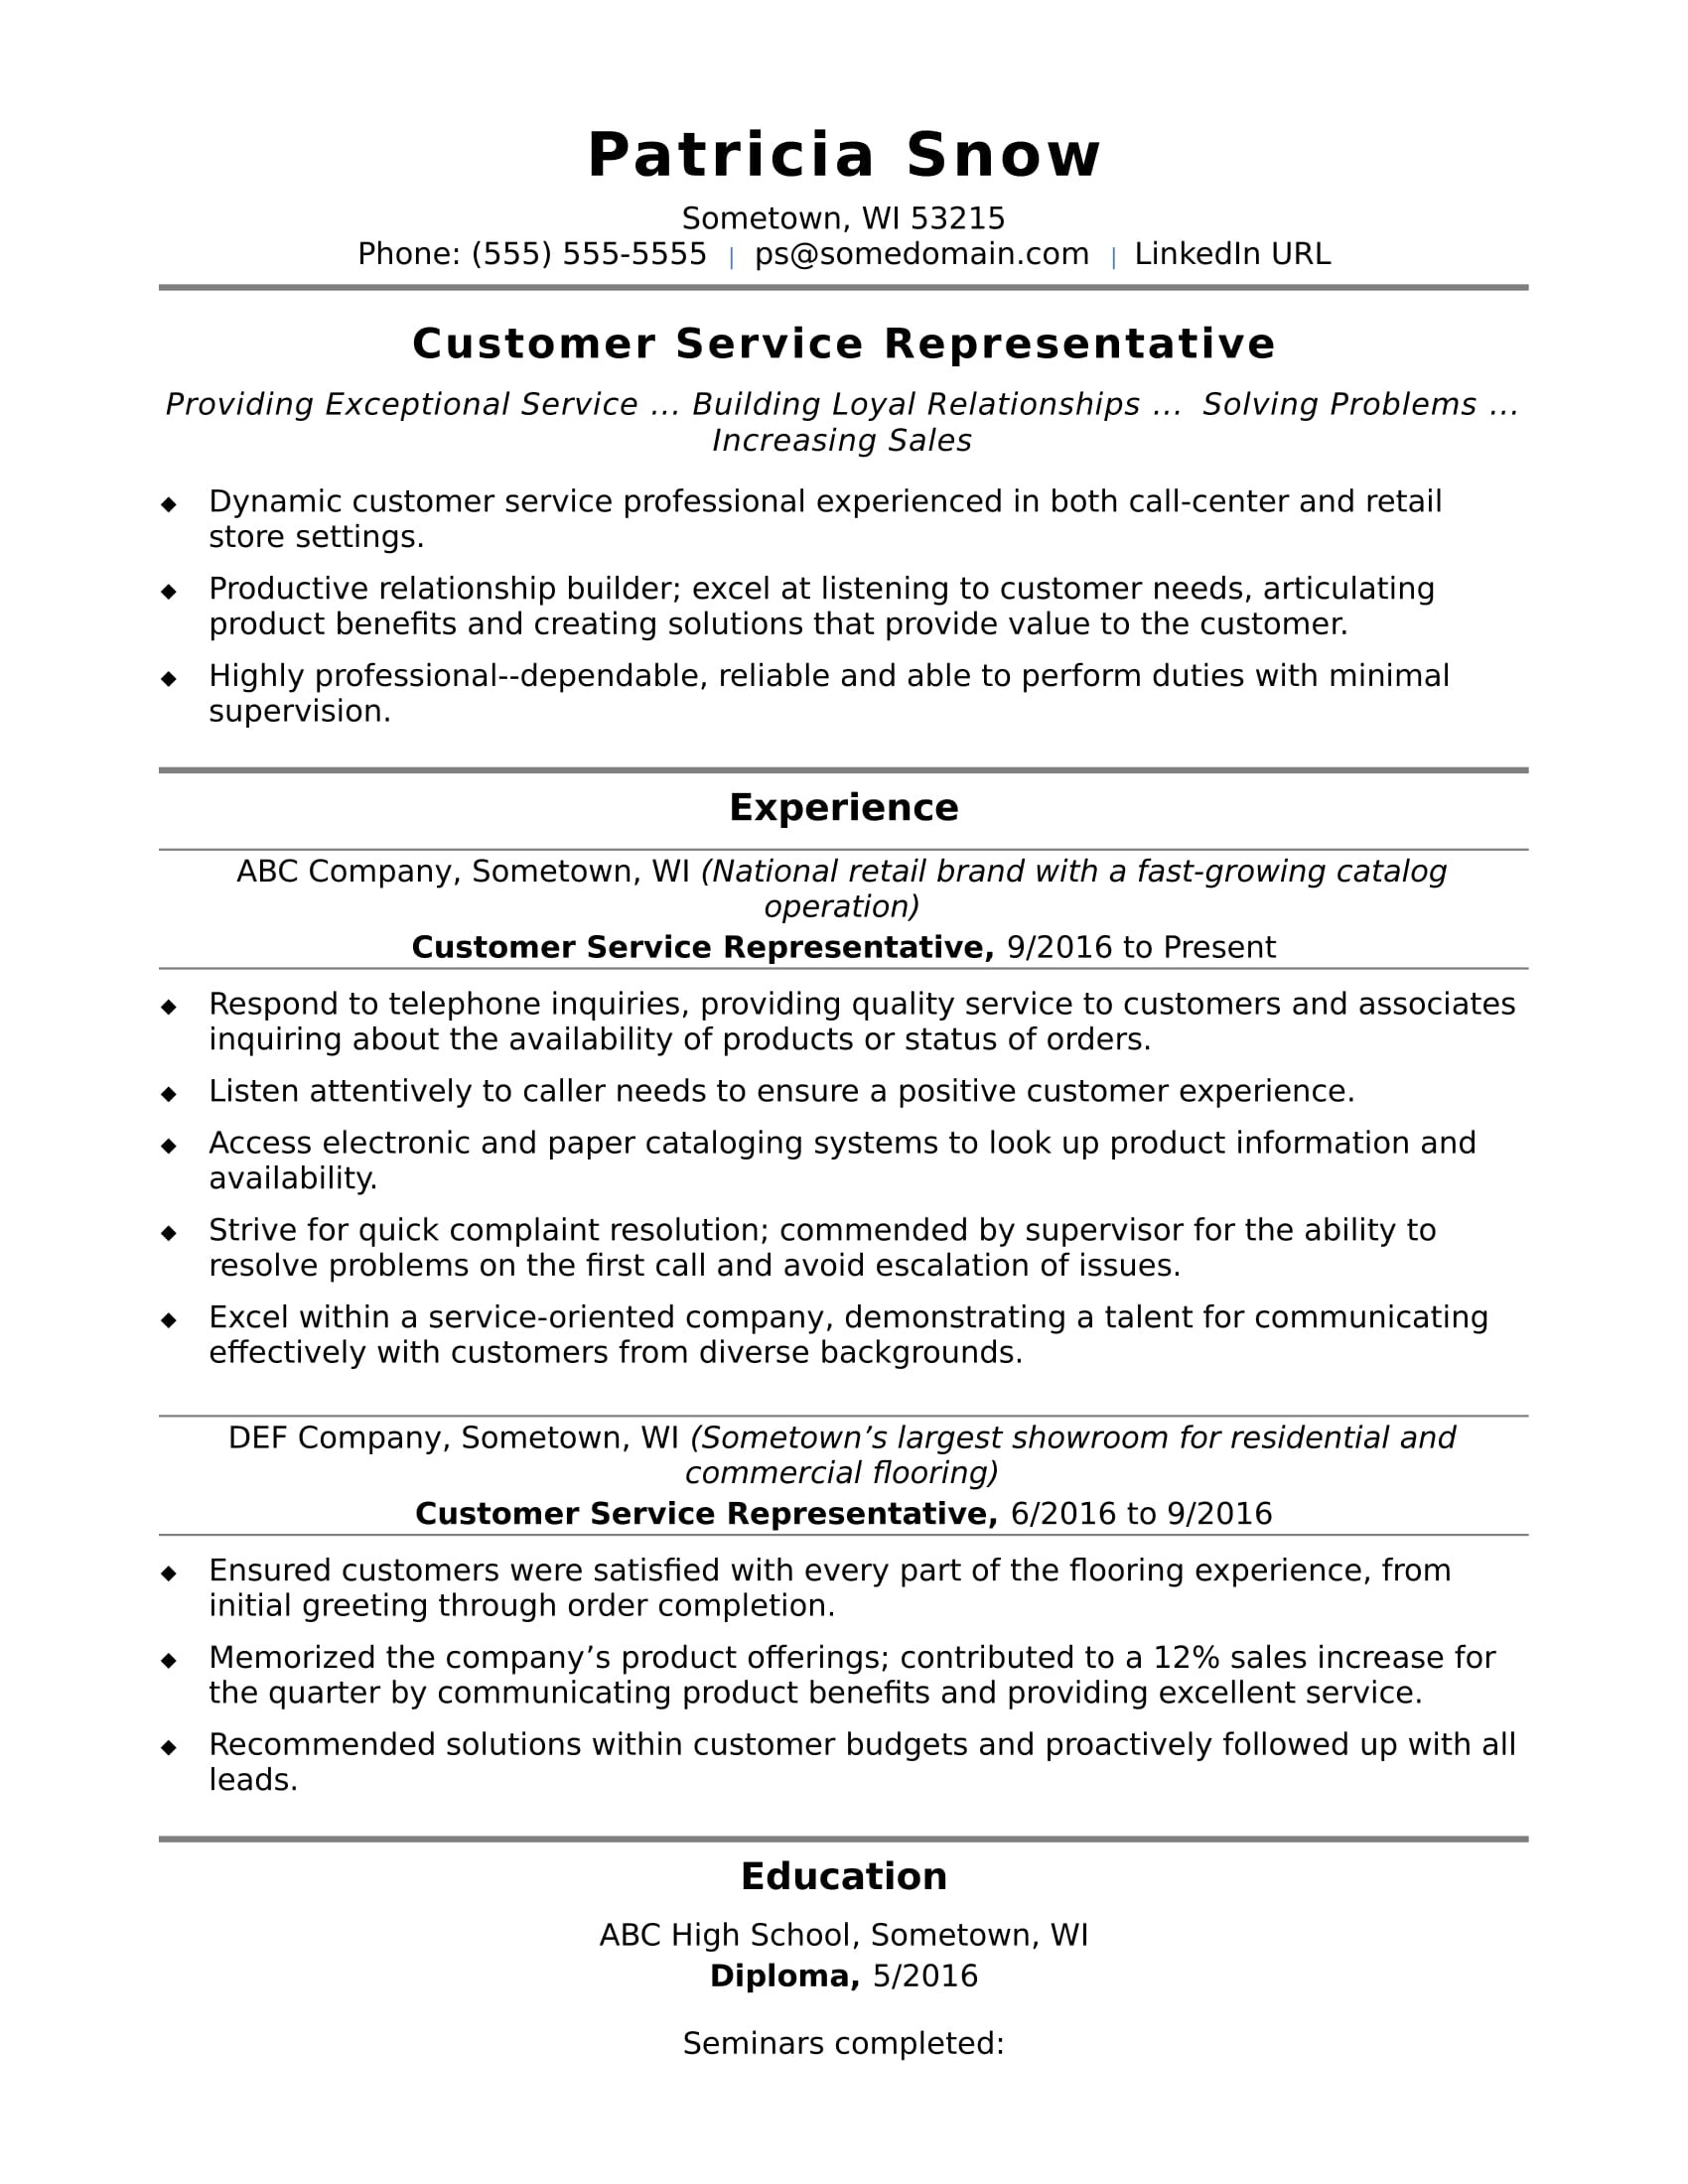 Sample Resume for Customer Service Health Manager Entry-level Customer Service Resume Sample Monster.com